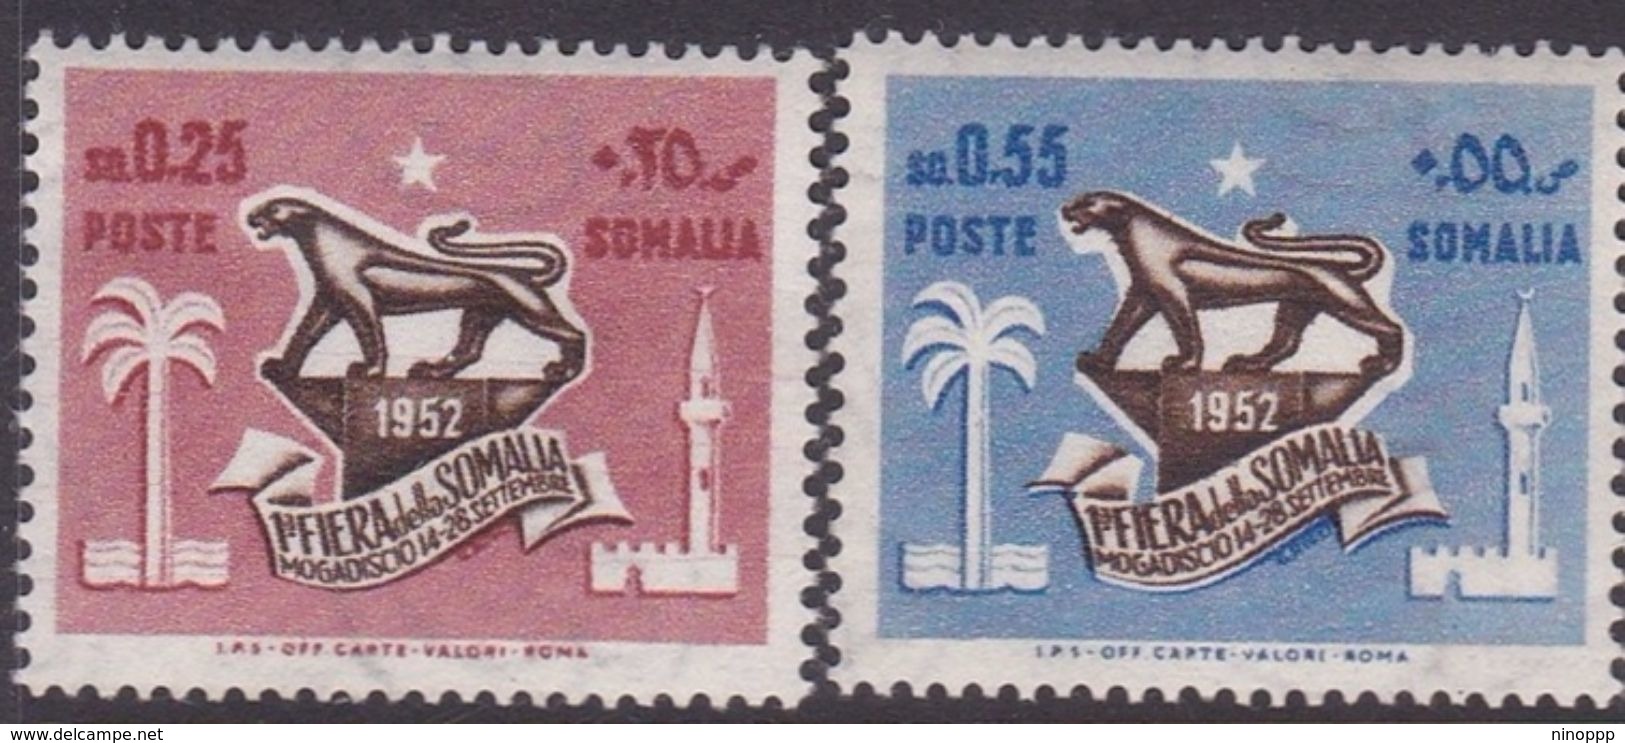 Somalia Scott 185-186 1952 First Somali Fair, Mint Never Hinged - Somalie (AFIS)